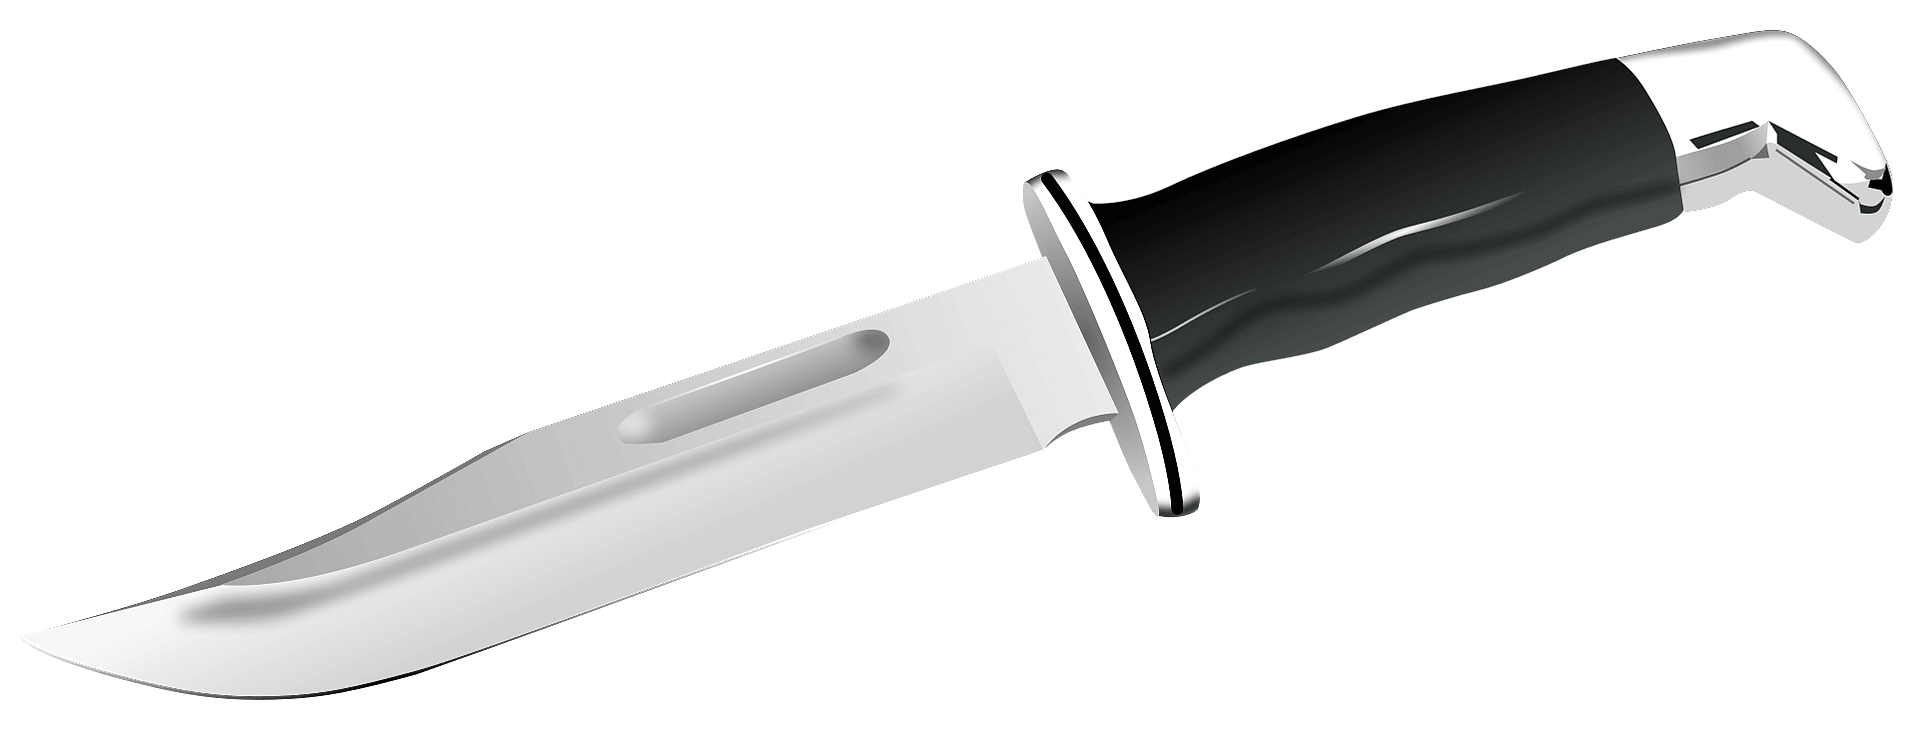 Knife clipart transparent 5